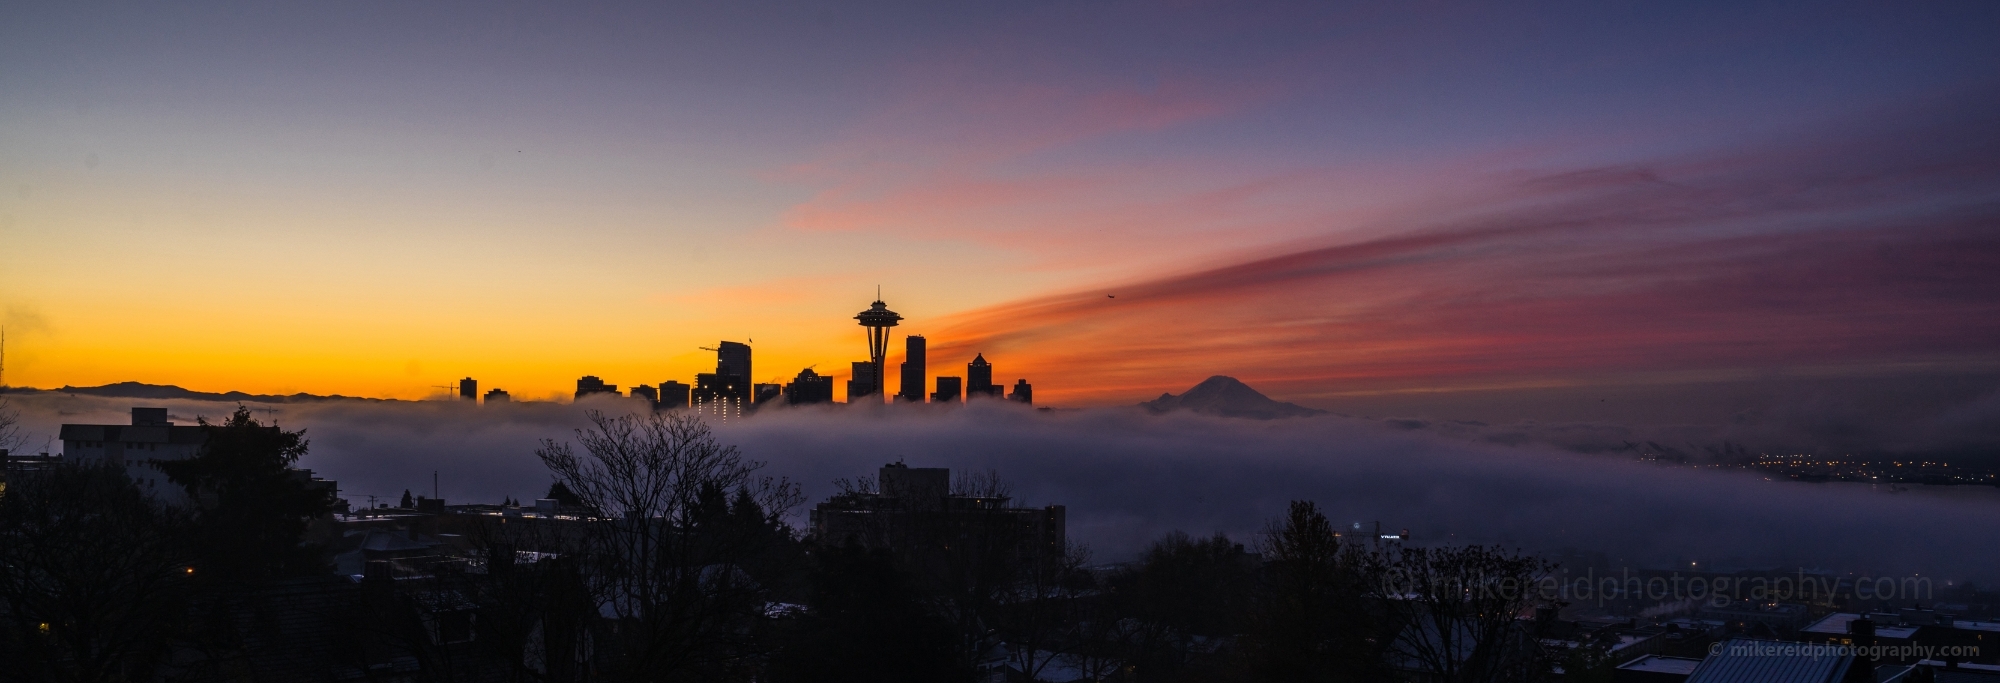 Seattle in the Fog at Sunrise.jpg 